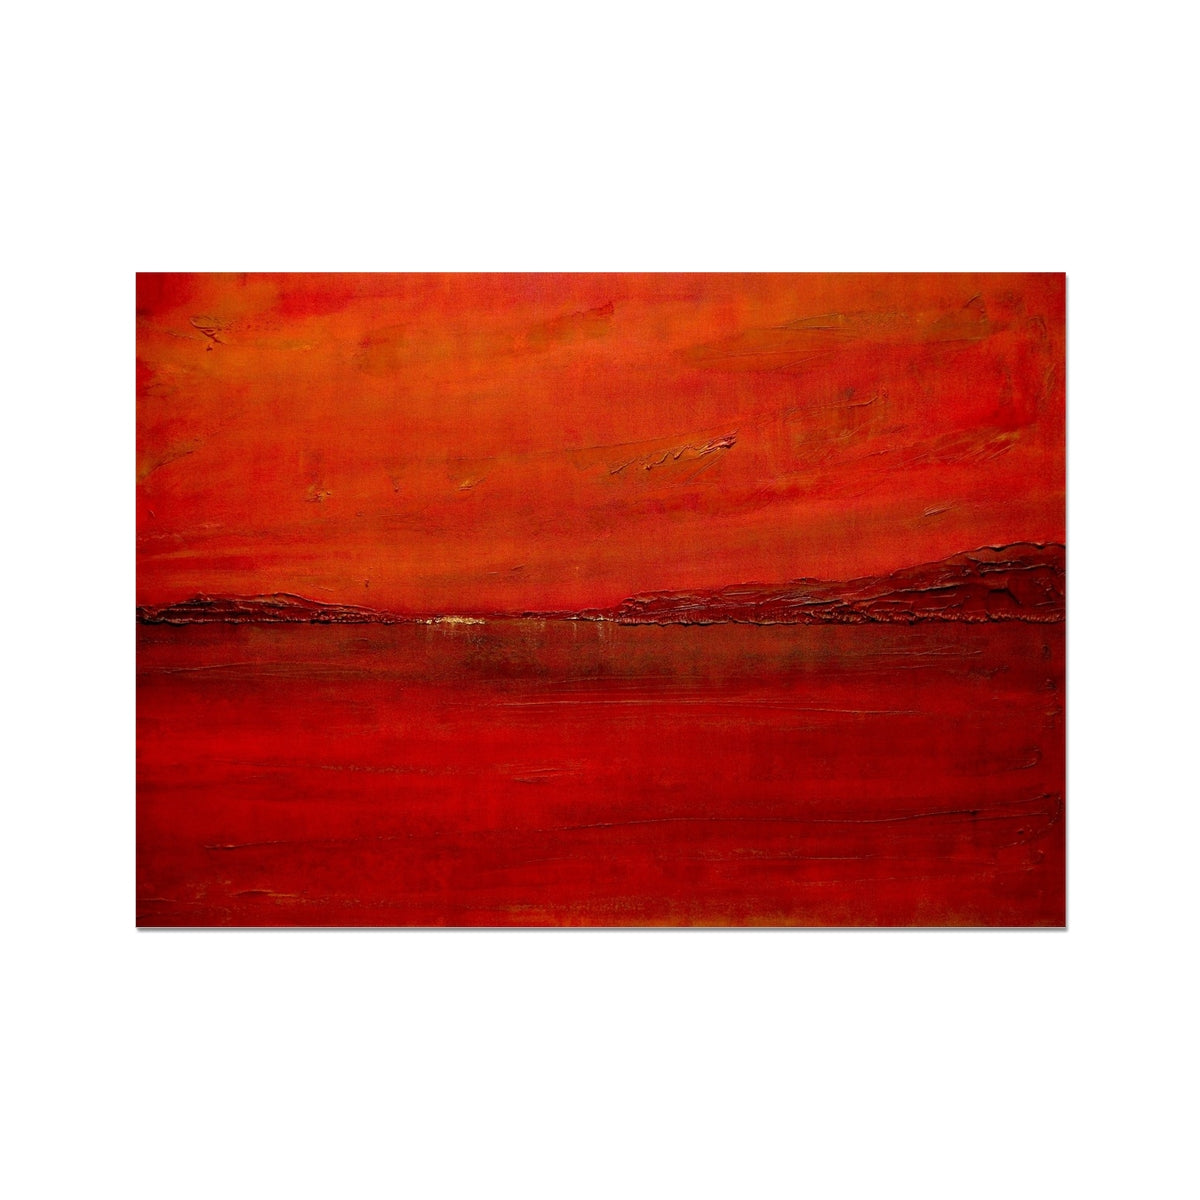 Deep Loch Lomond Sunset Painting | Fine Art Prints From Scotland-Unframed Prints-Scottish Lochs & Mountains Art Gallery-A2 Landscape-Paintings, Prints, Homeware, Art Gifts From Scotland By Scottish Artist Kevin Hunter